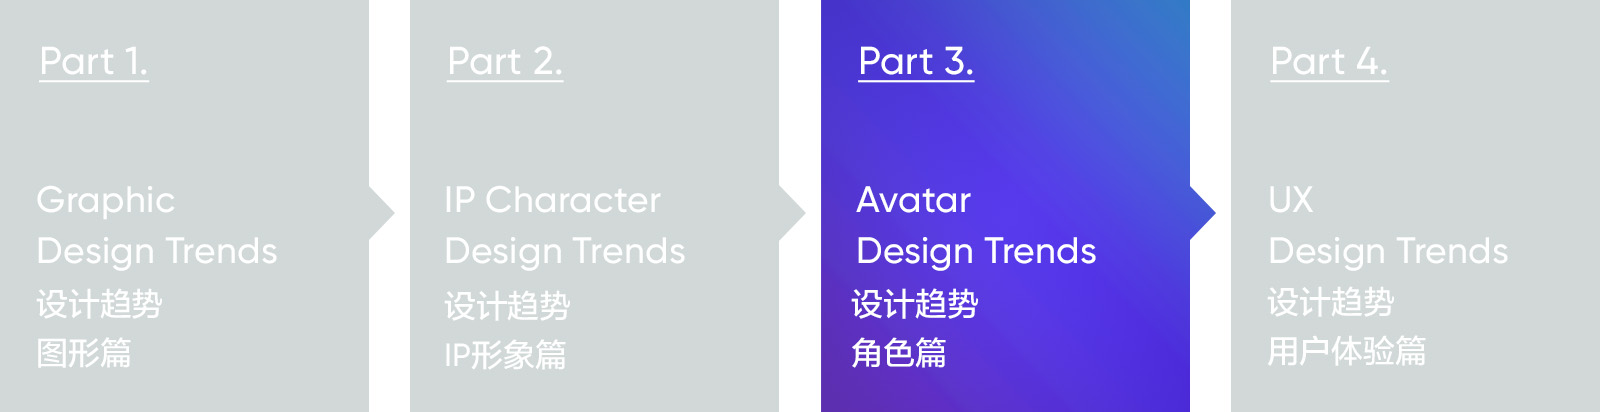 2019-2020 设计趋势 · Avatar角色篇 - 图2